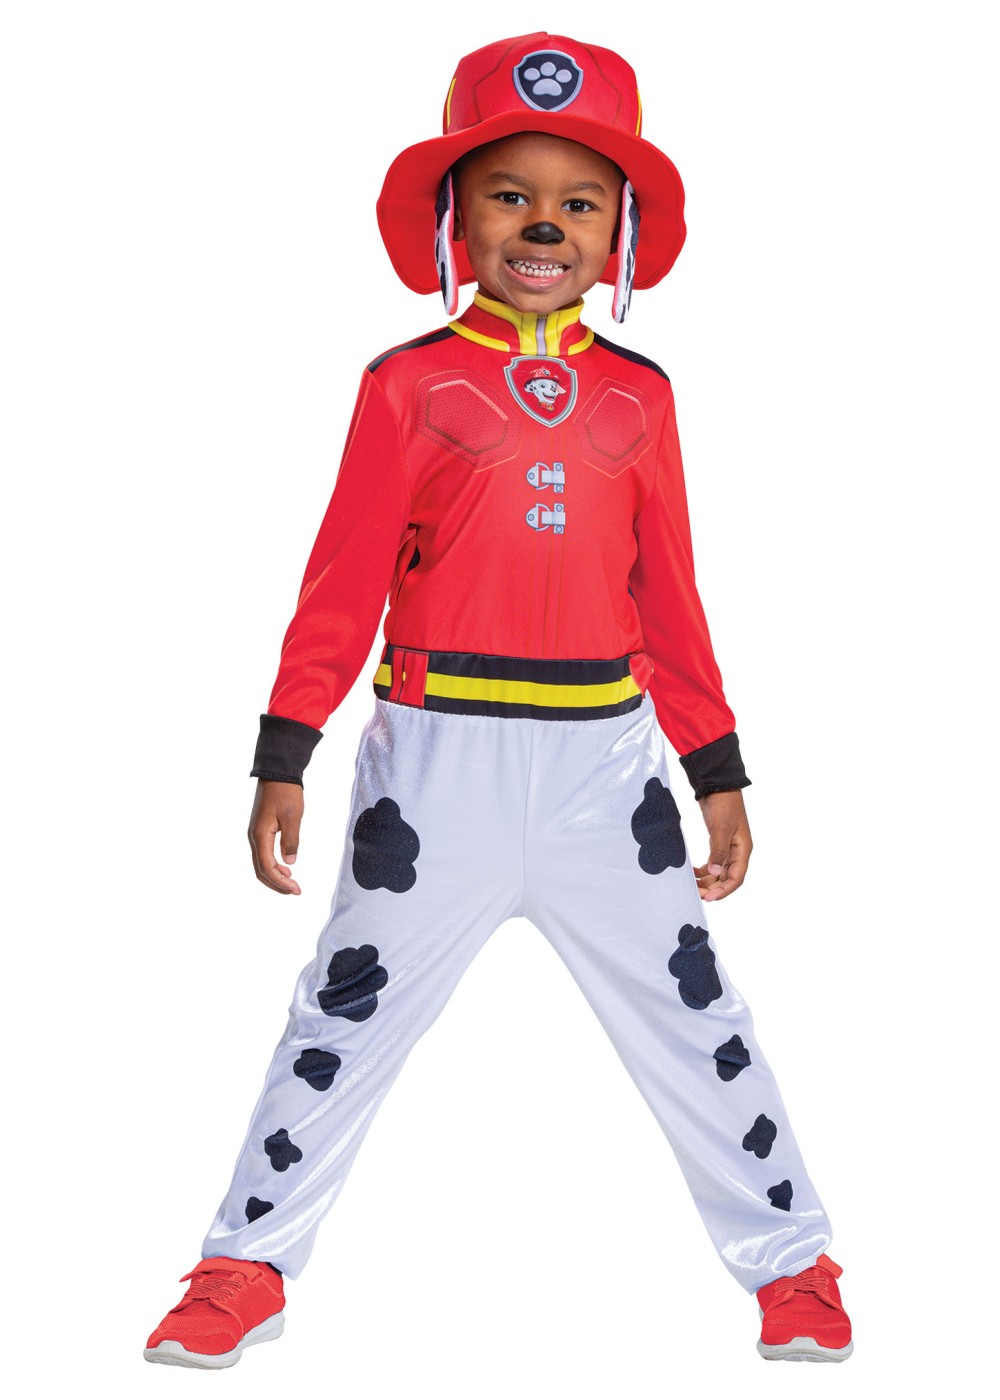 Paw Patrol Marshall Toddler Costume